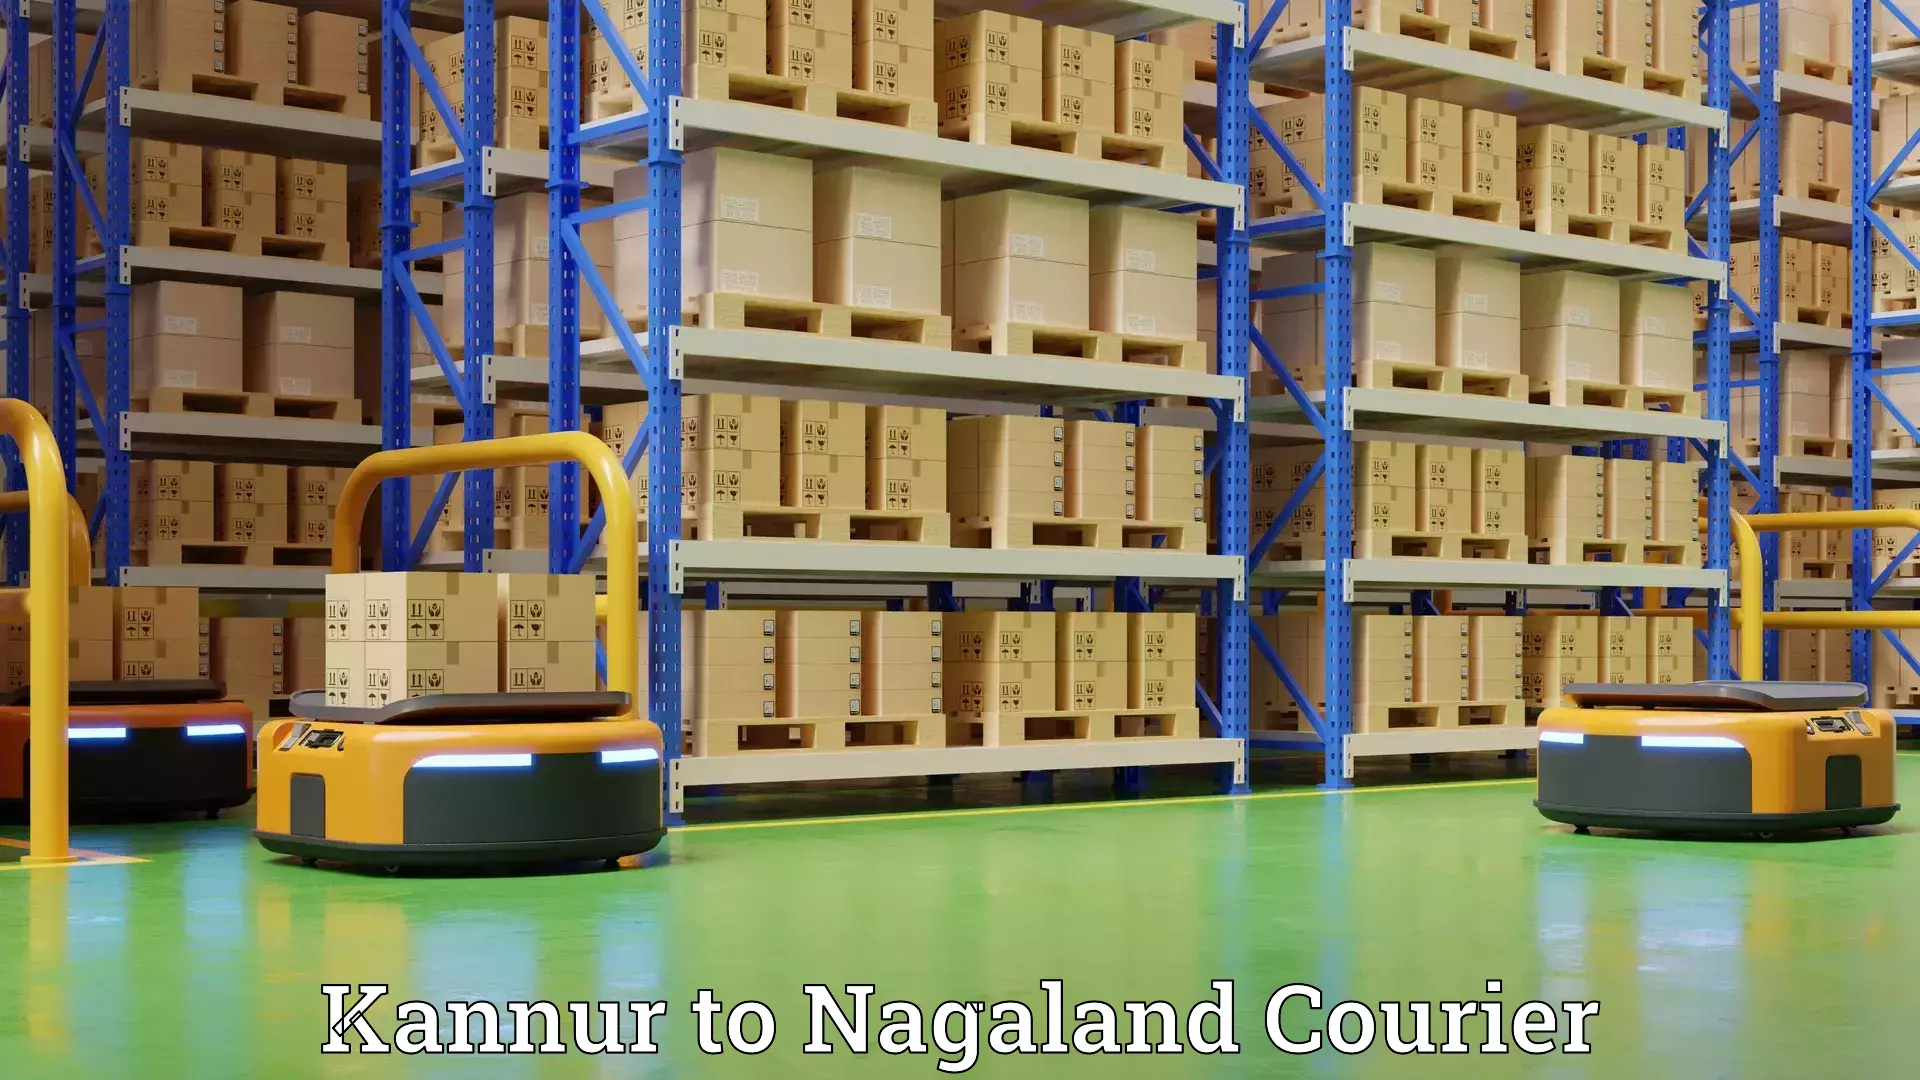 Professional moving company Kannur to Nagaland